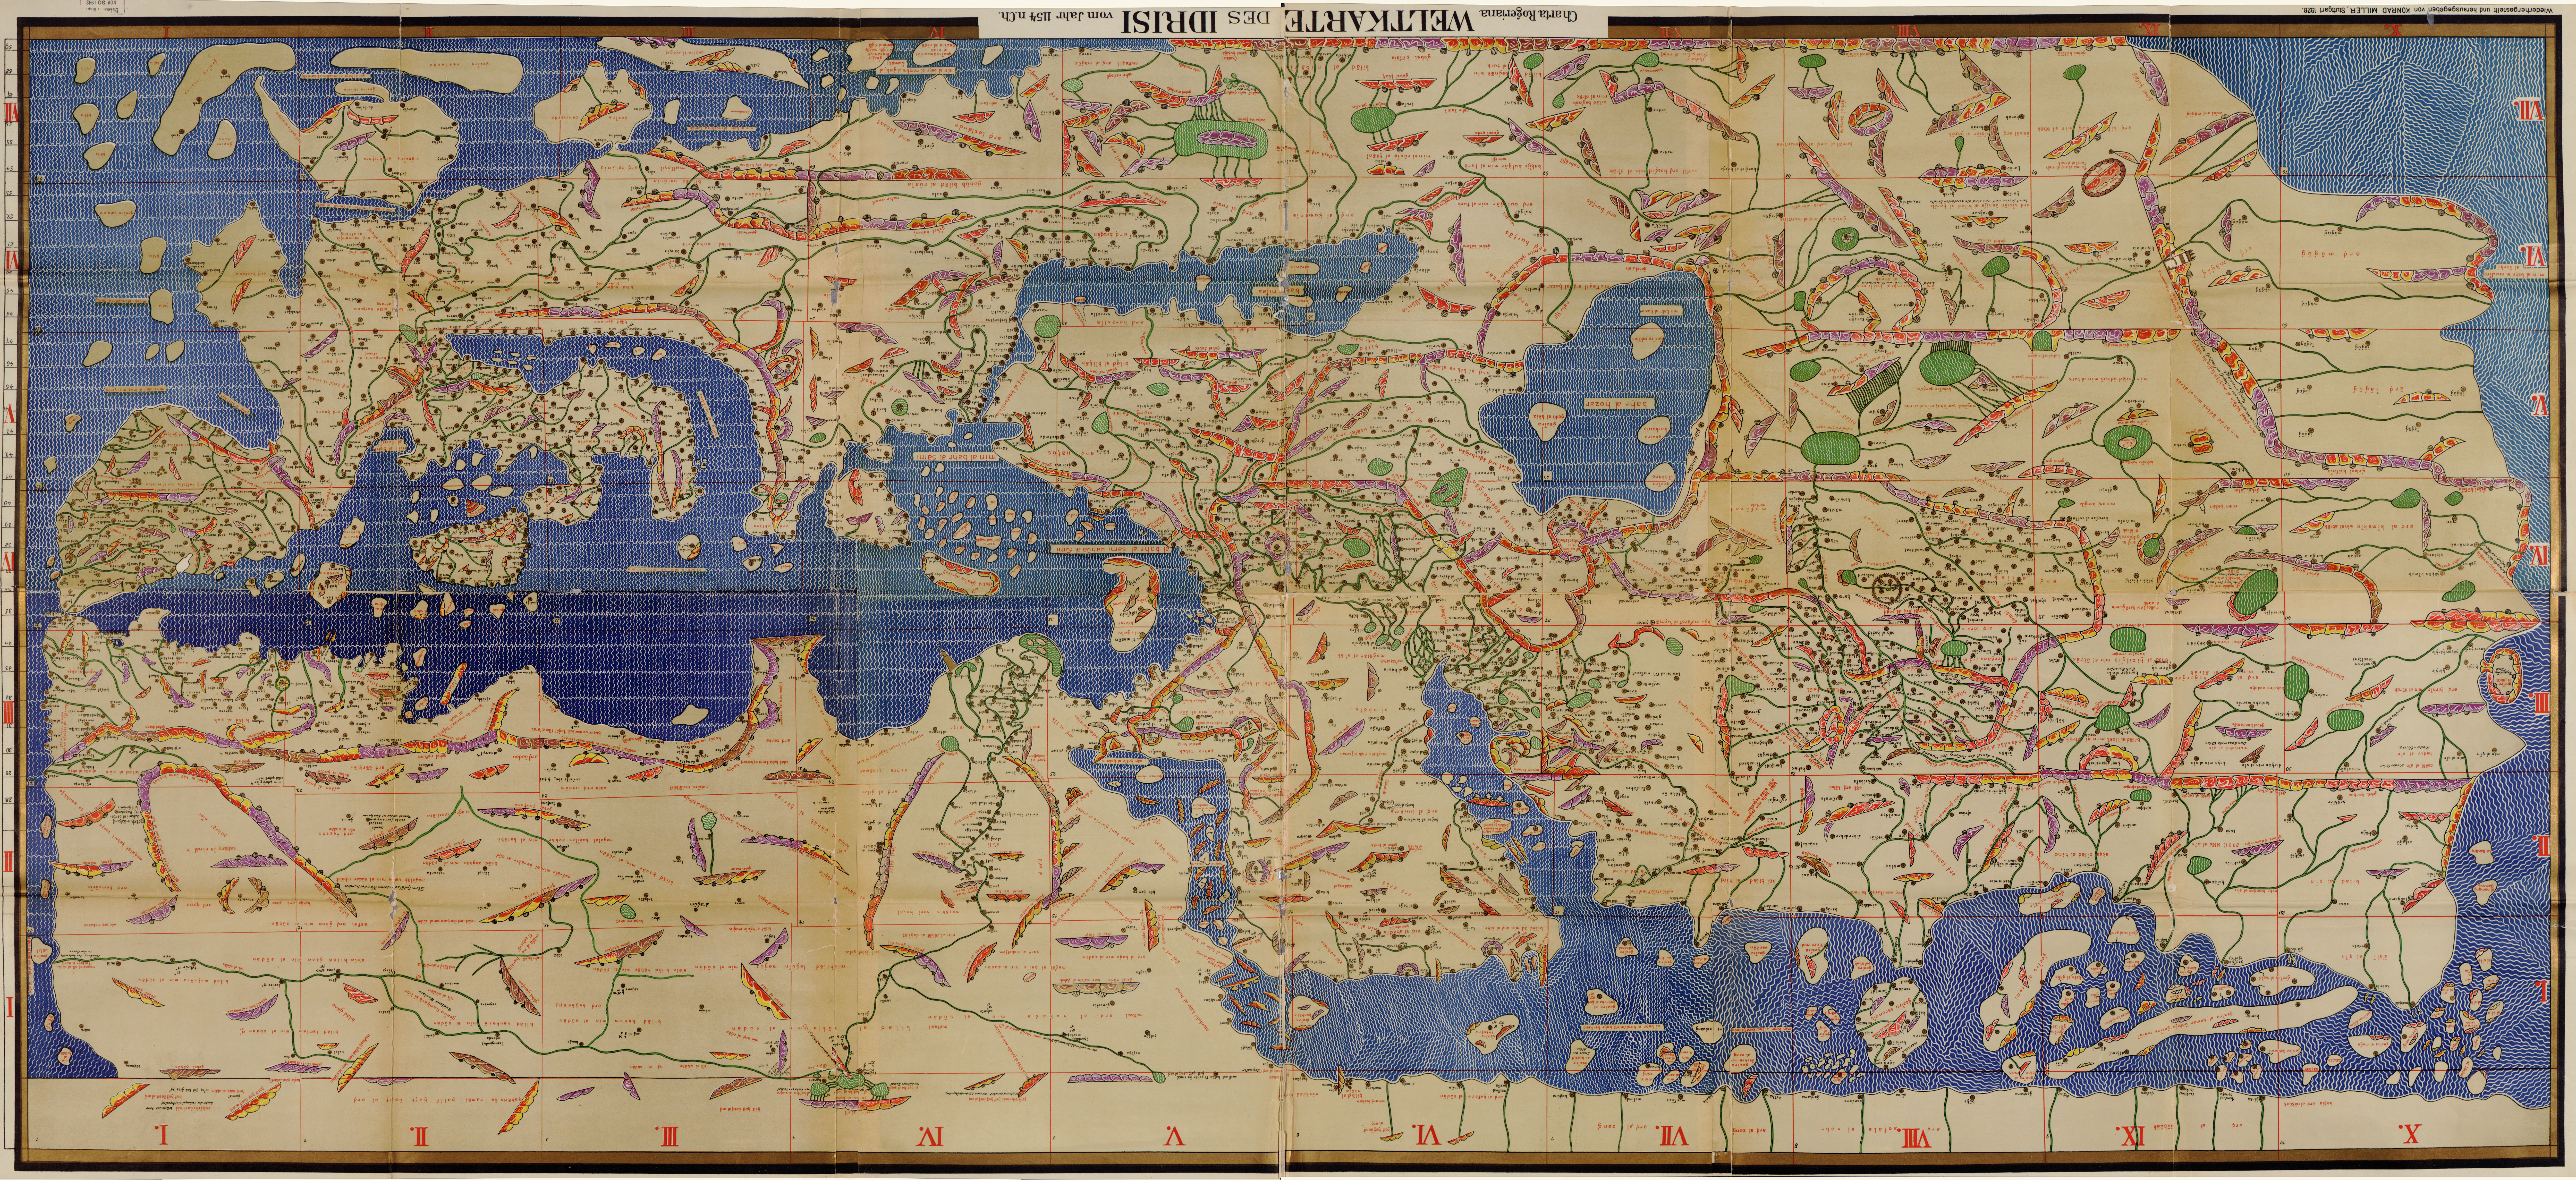 Map by pre-modern cartographer Muhammad Al-Idrisi